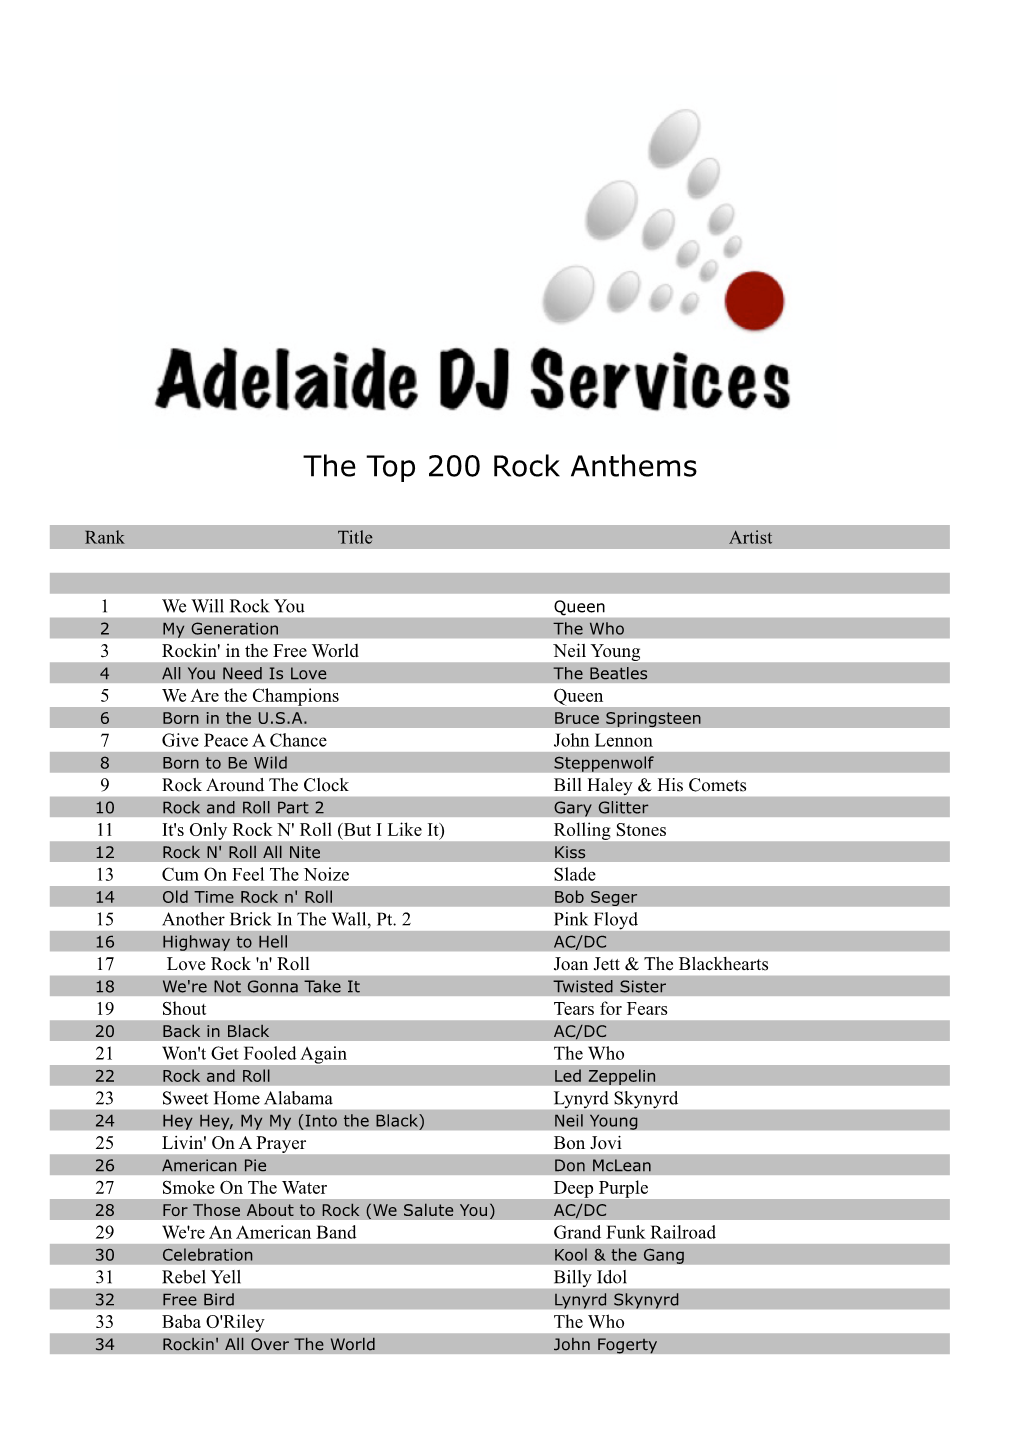 Adelaide DJ Services Top 200 Rock Anthems.Pdf